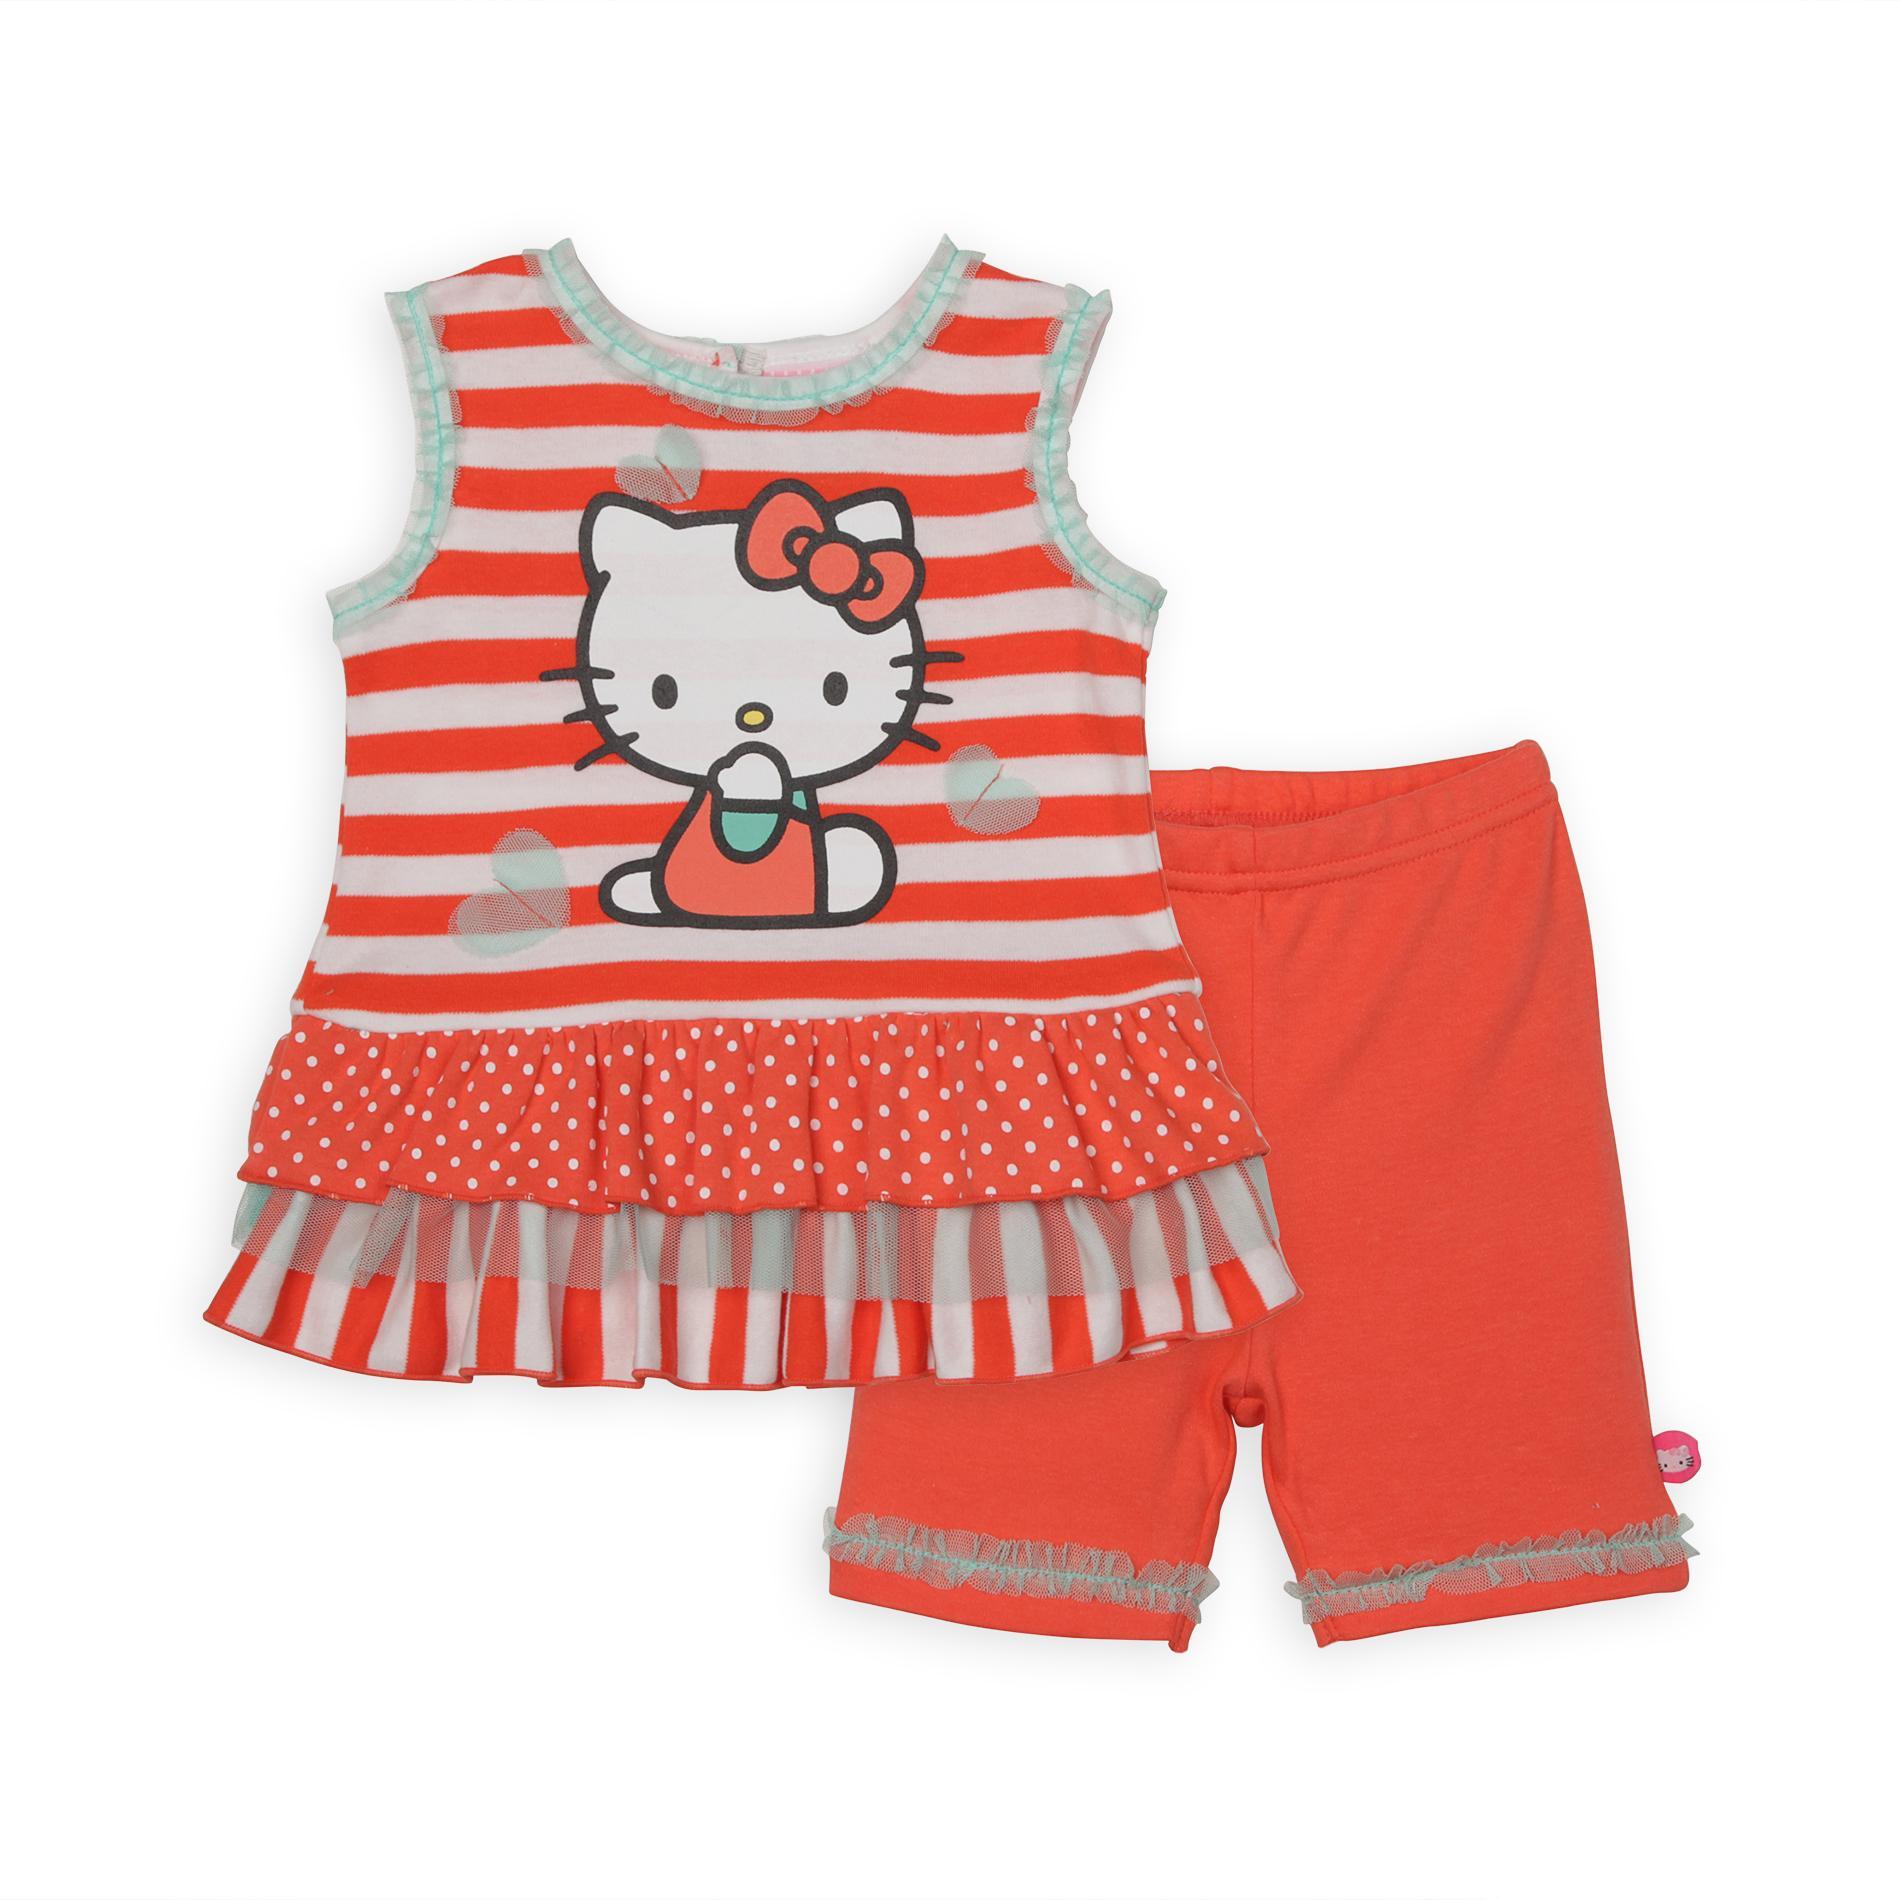 Hello Kitty Infant & Toddler Girl's Peplum Tank Top & Knit Shorts